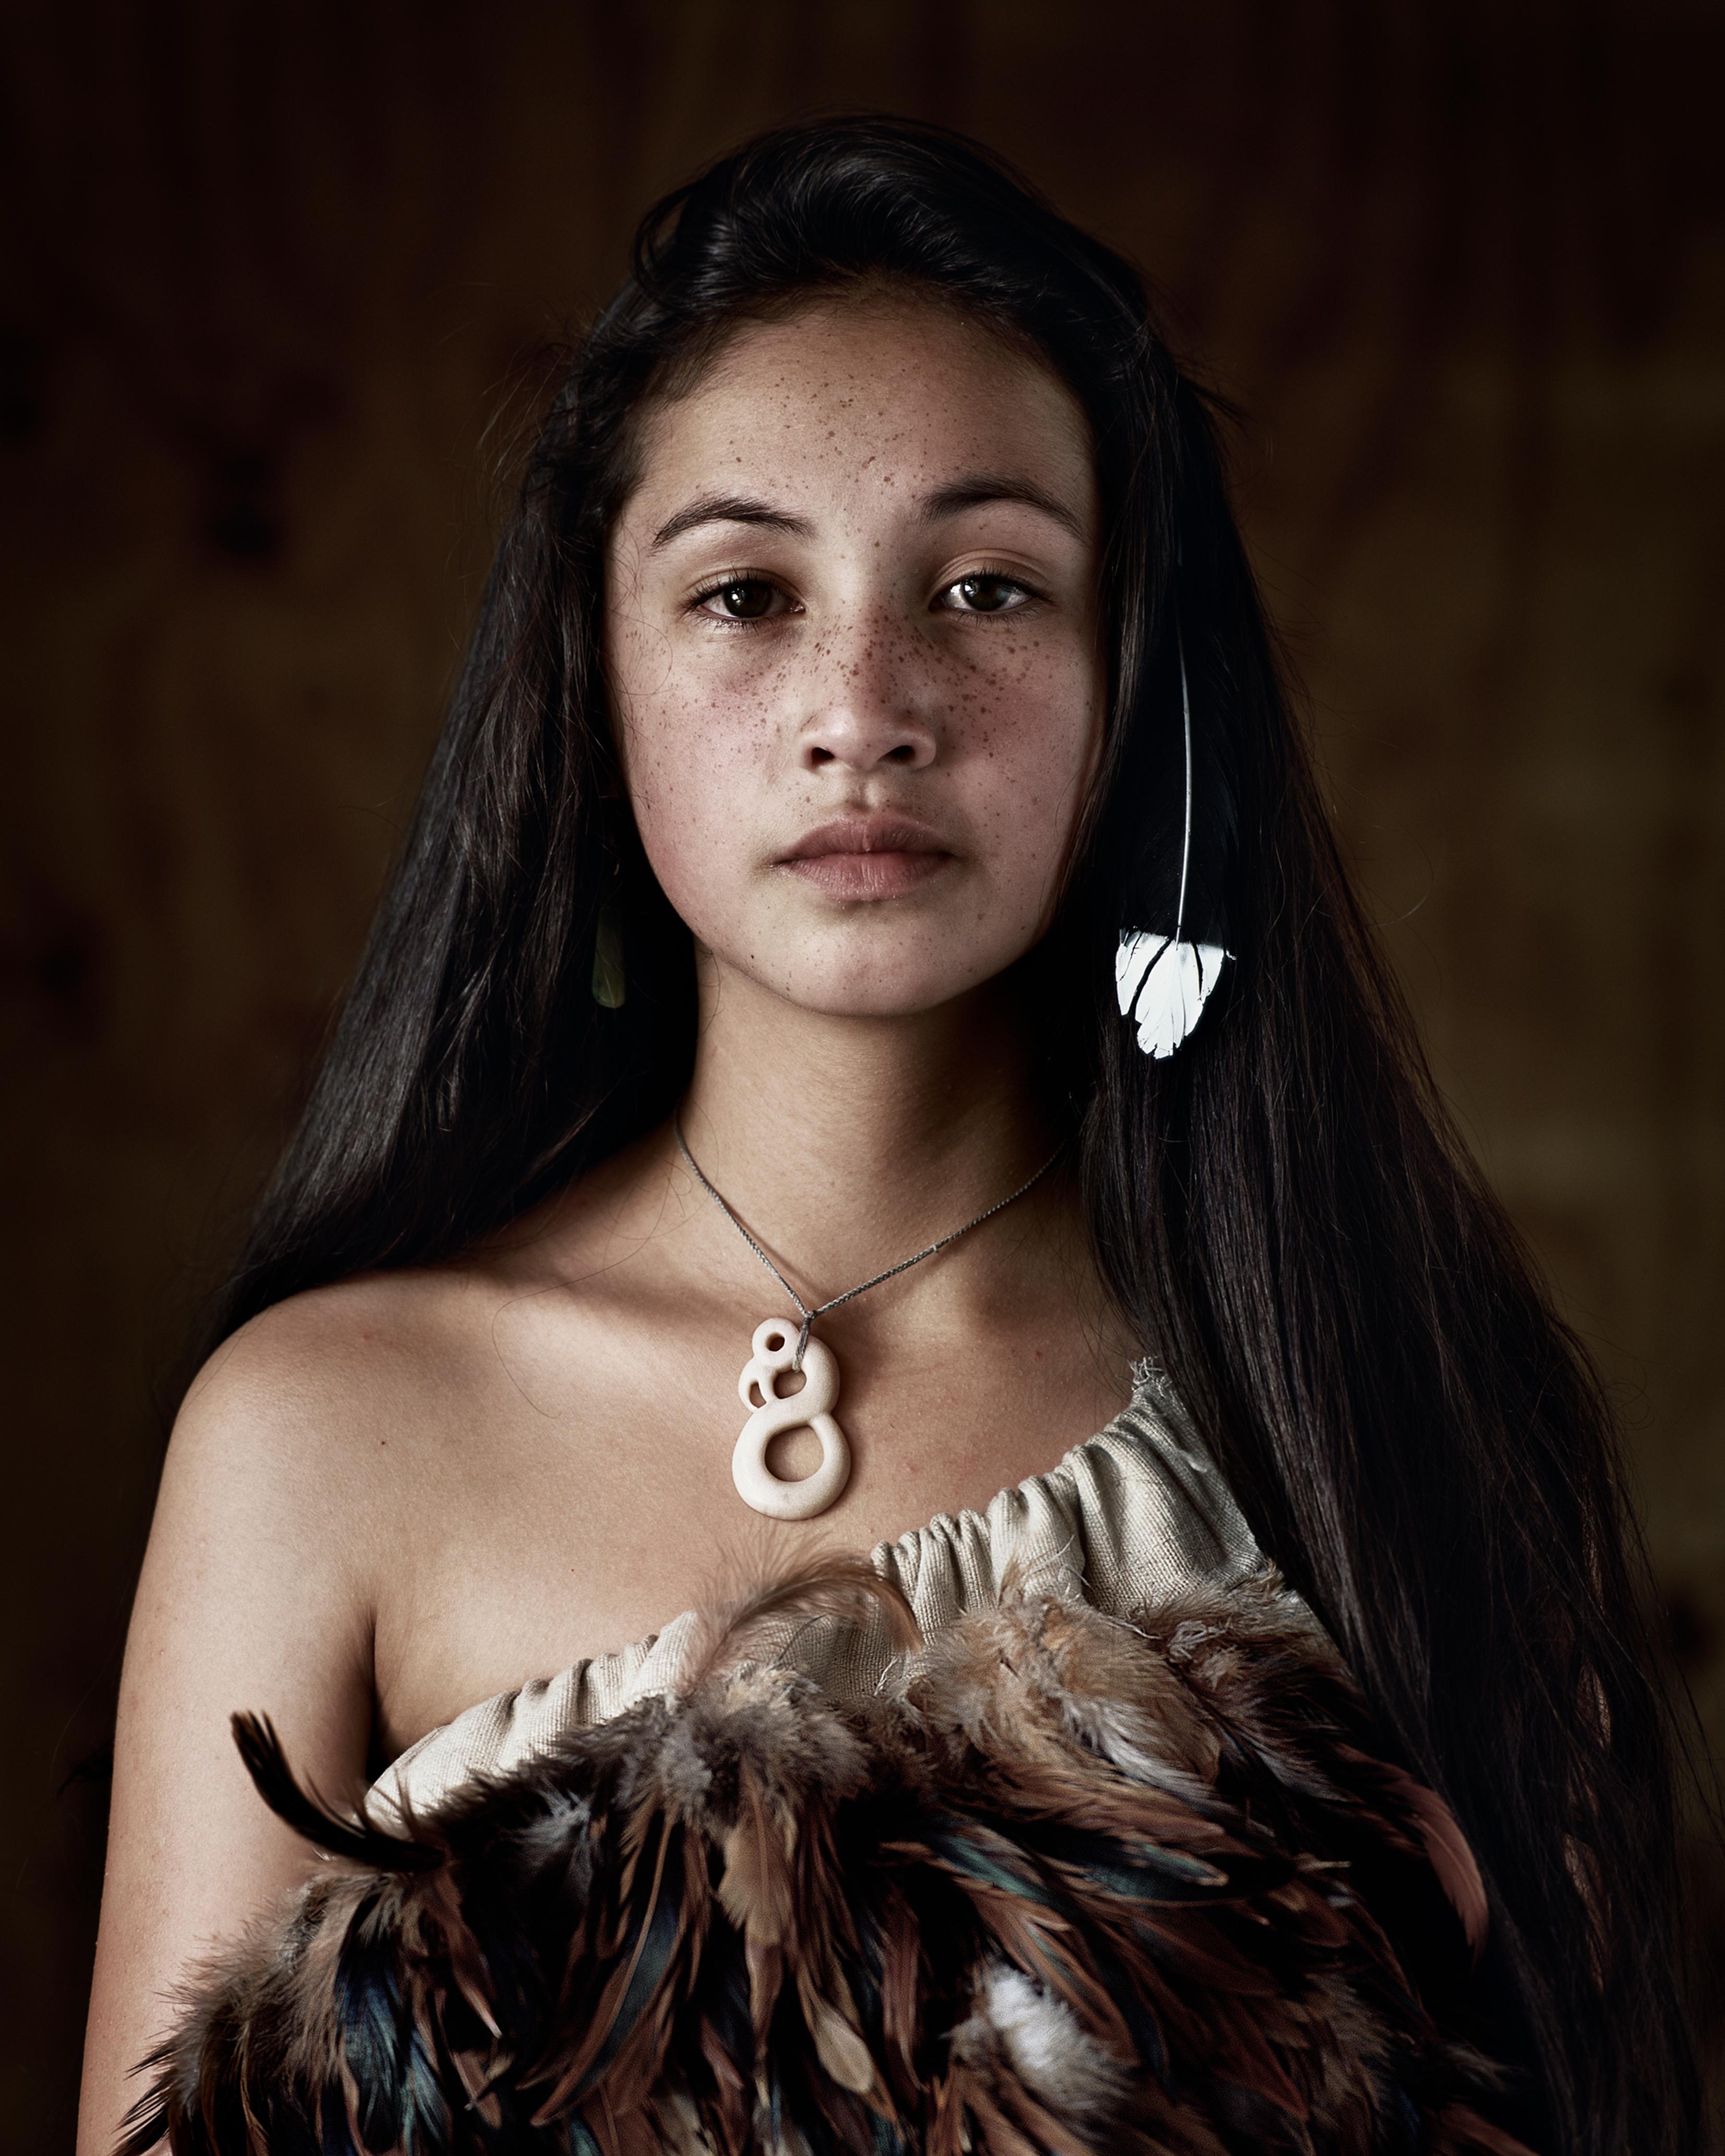 Jimmy Nelson Portrait Photograph - IX 141 // IX Maori, New Zealand (66.93" x 55.11")